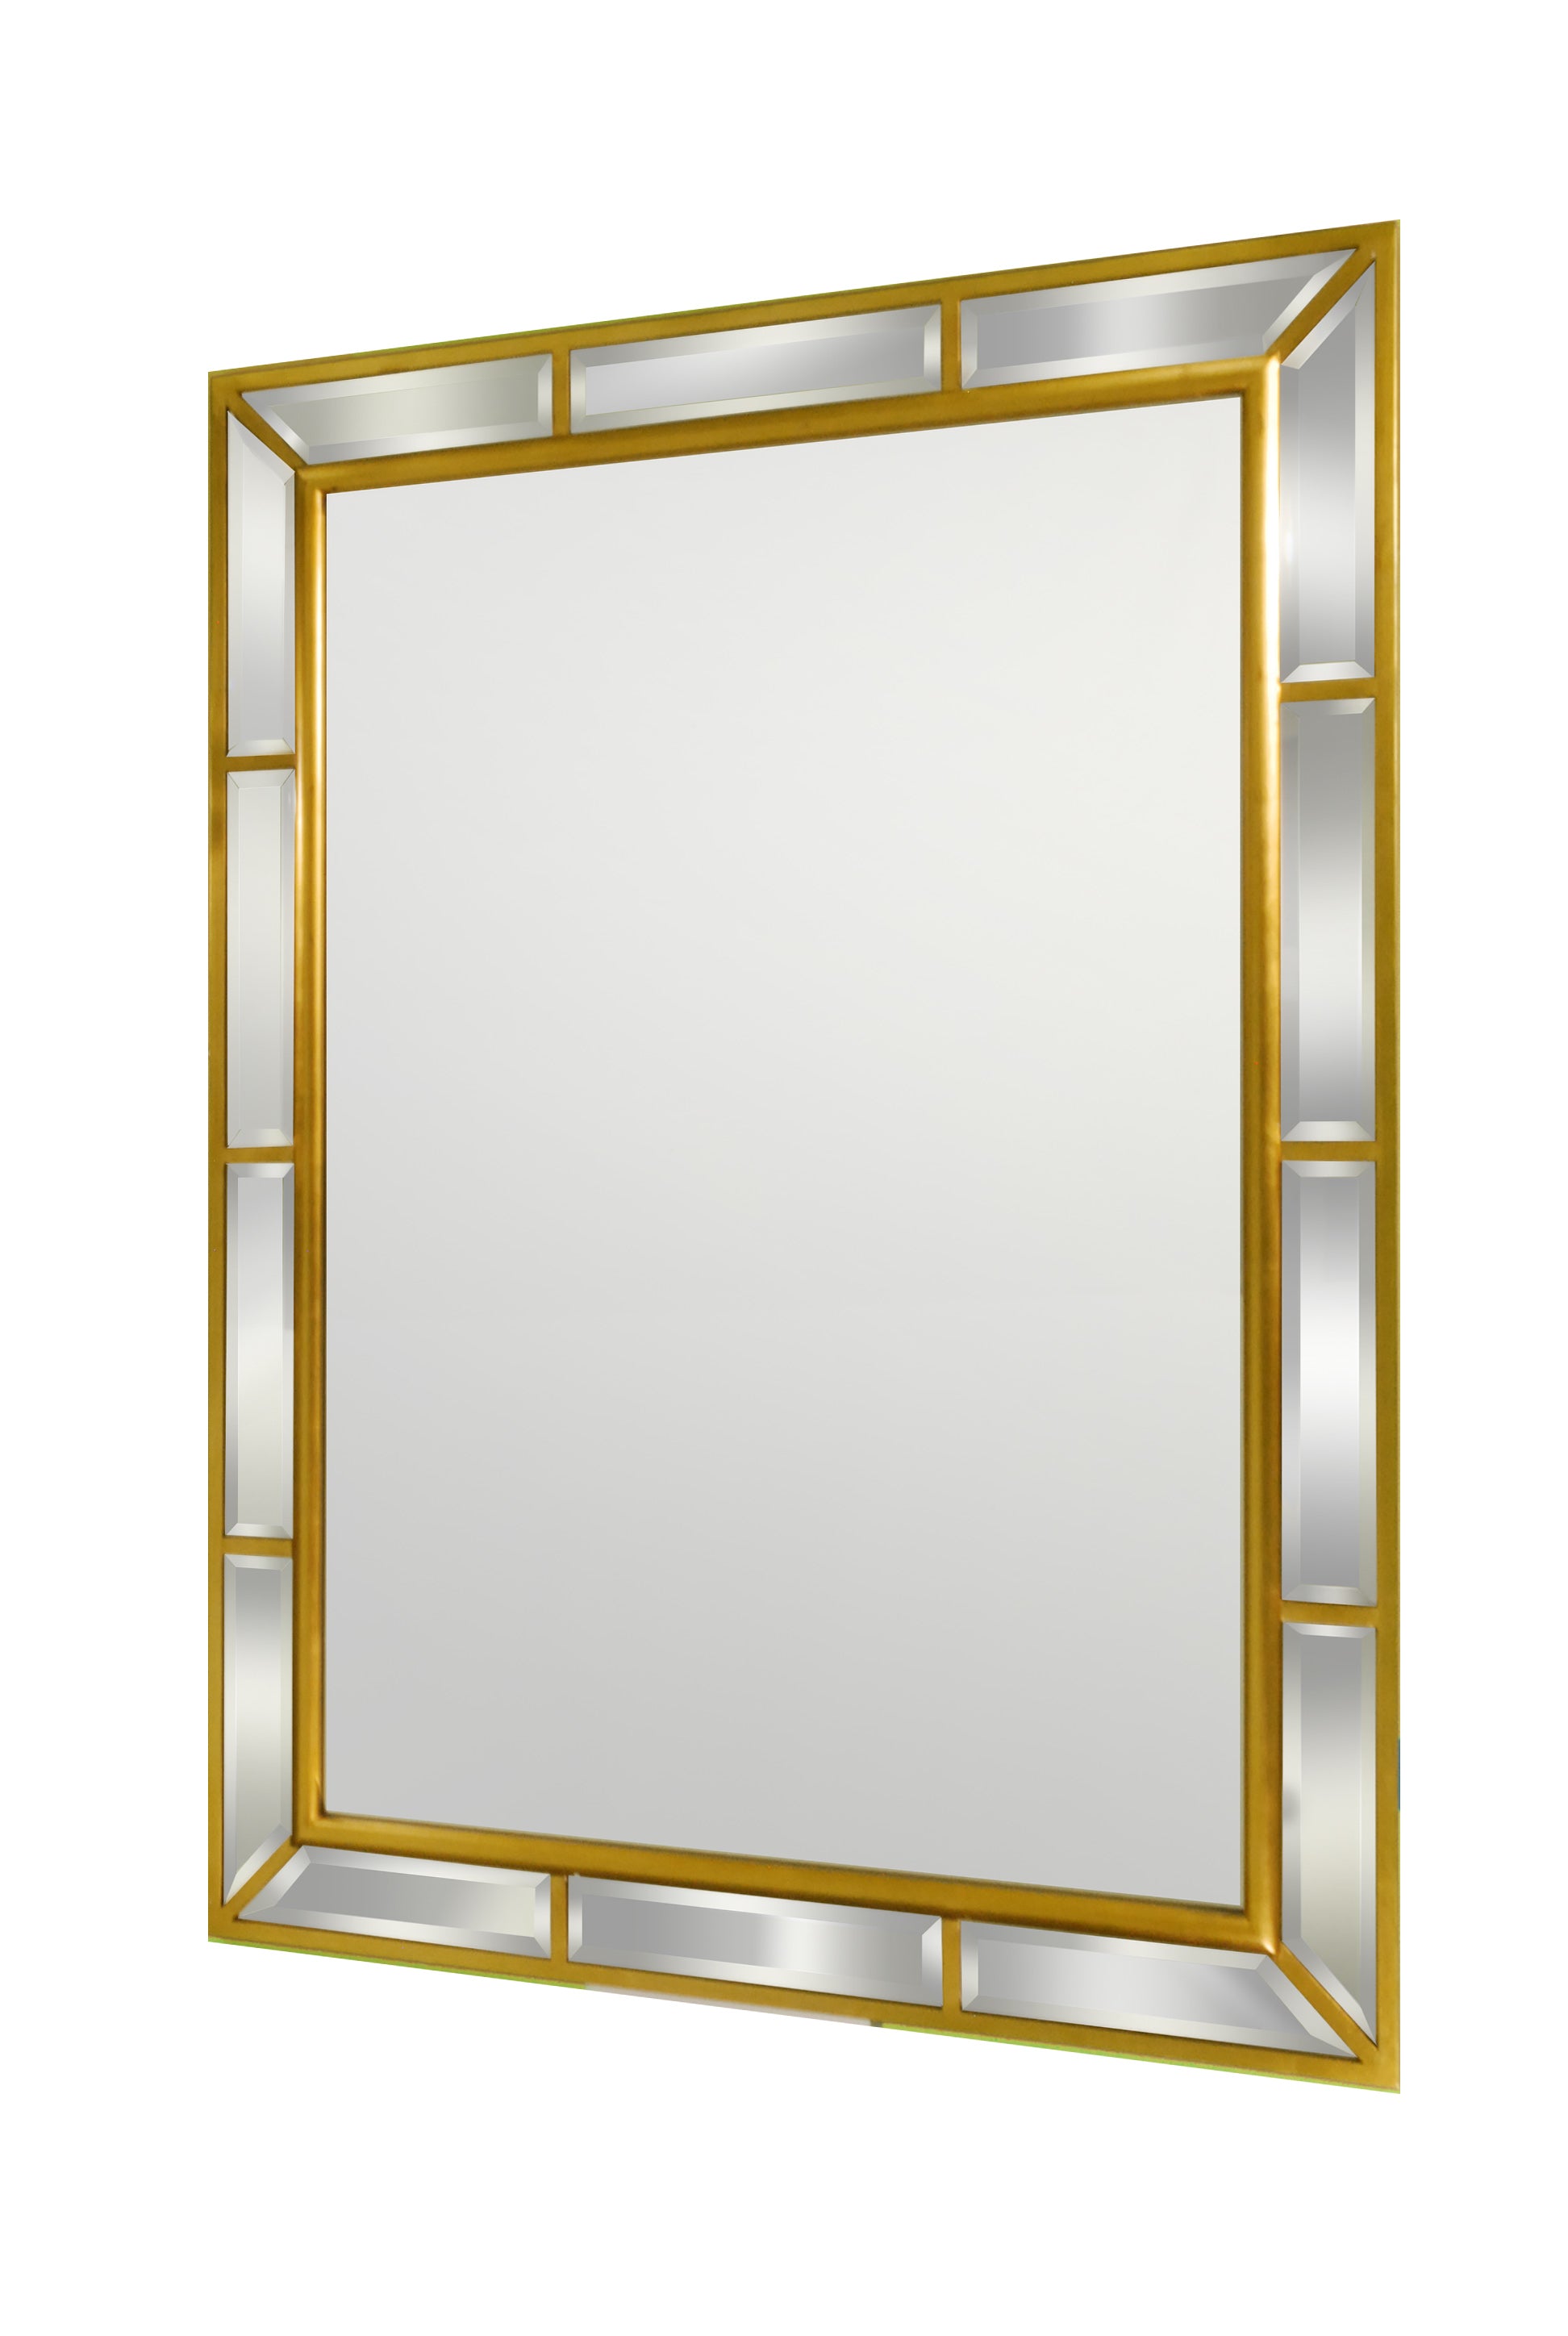 Traditional gold leaf mirror